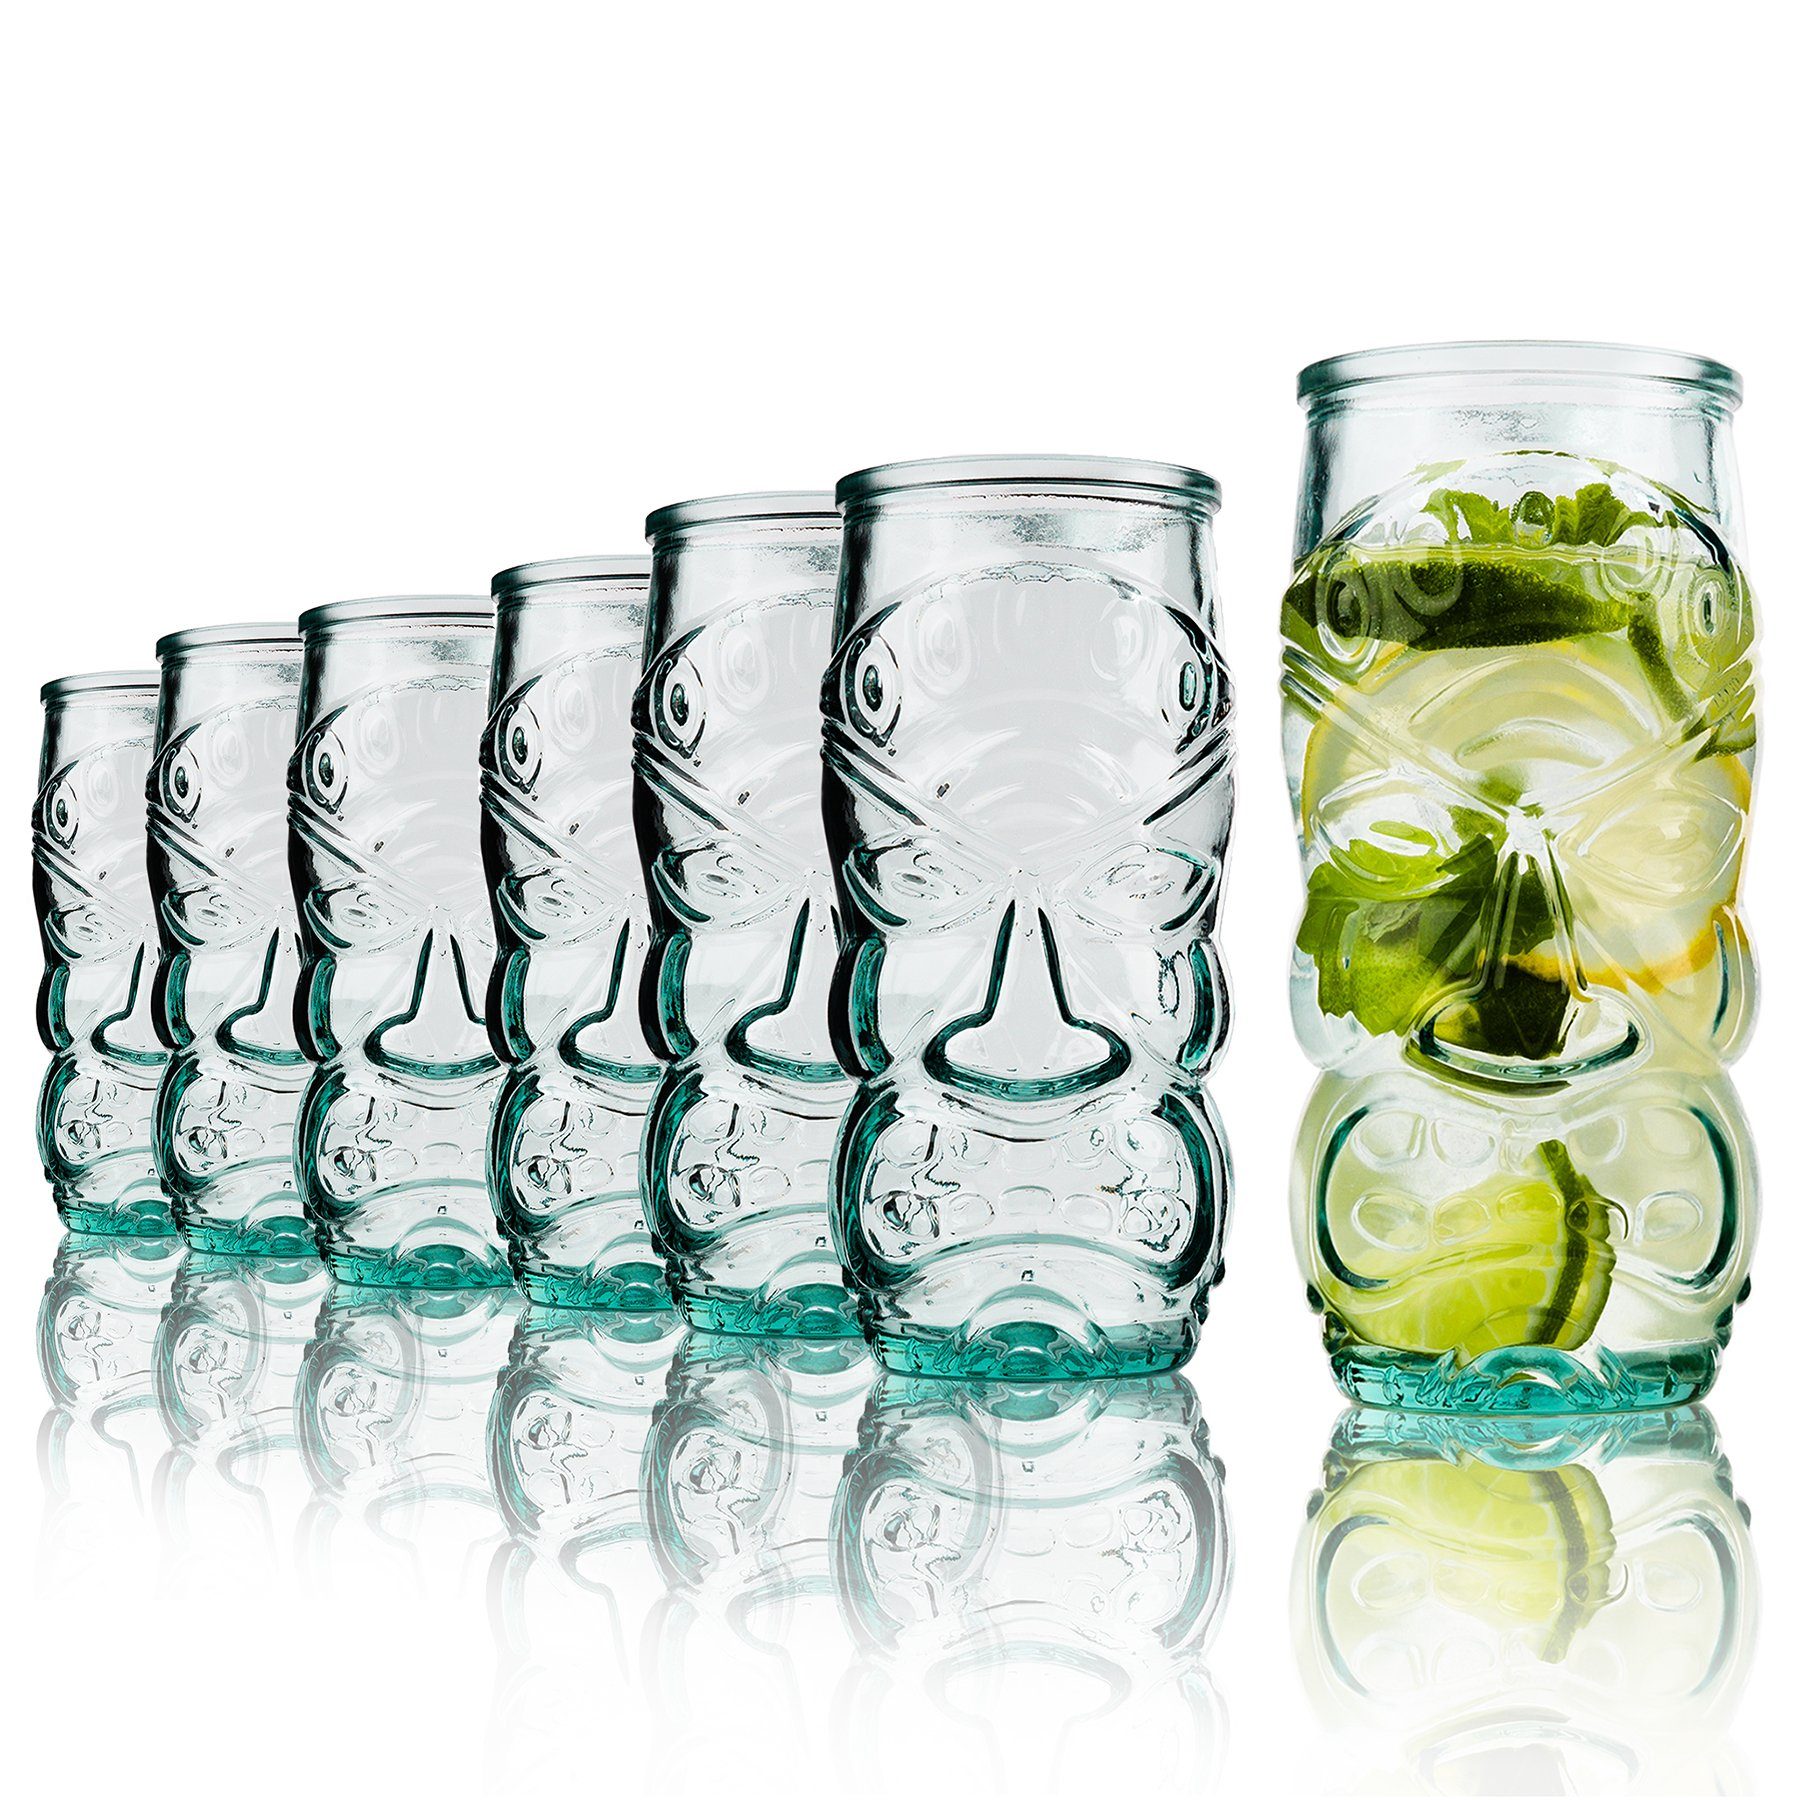 https://i.otto.de/i/otto/304c7fd9-cbef-591c-ab99-0c1f710fb387/bigdean-cocktailglas-8-trinkglaeser-im-tiki-look-550ml-longdrinkglas-100-recycling-glas.jpg?$formatz$